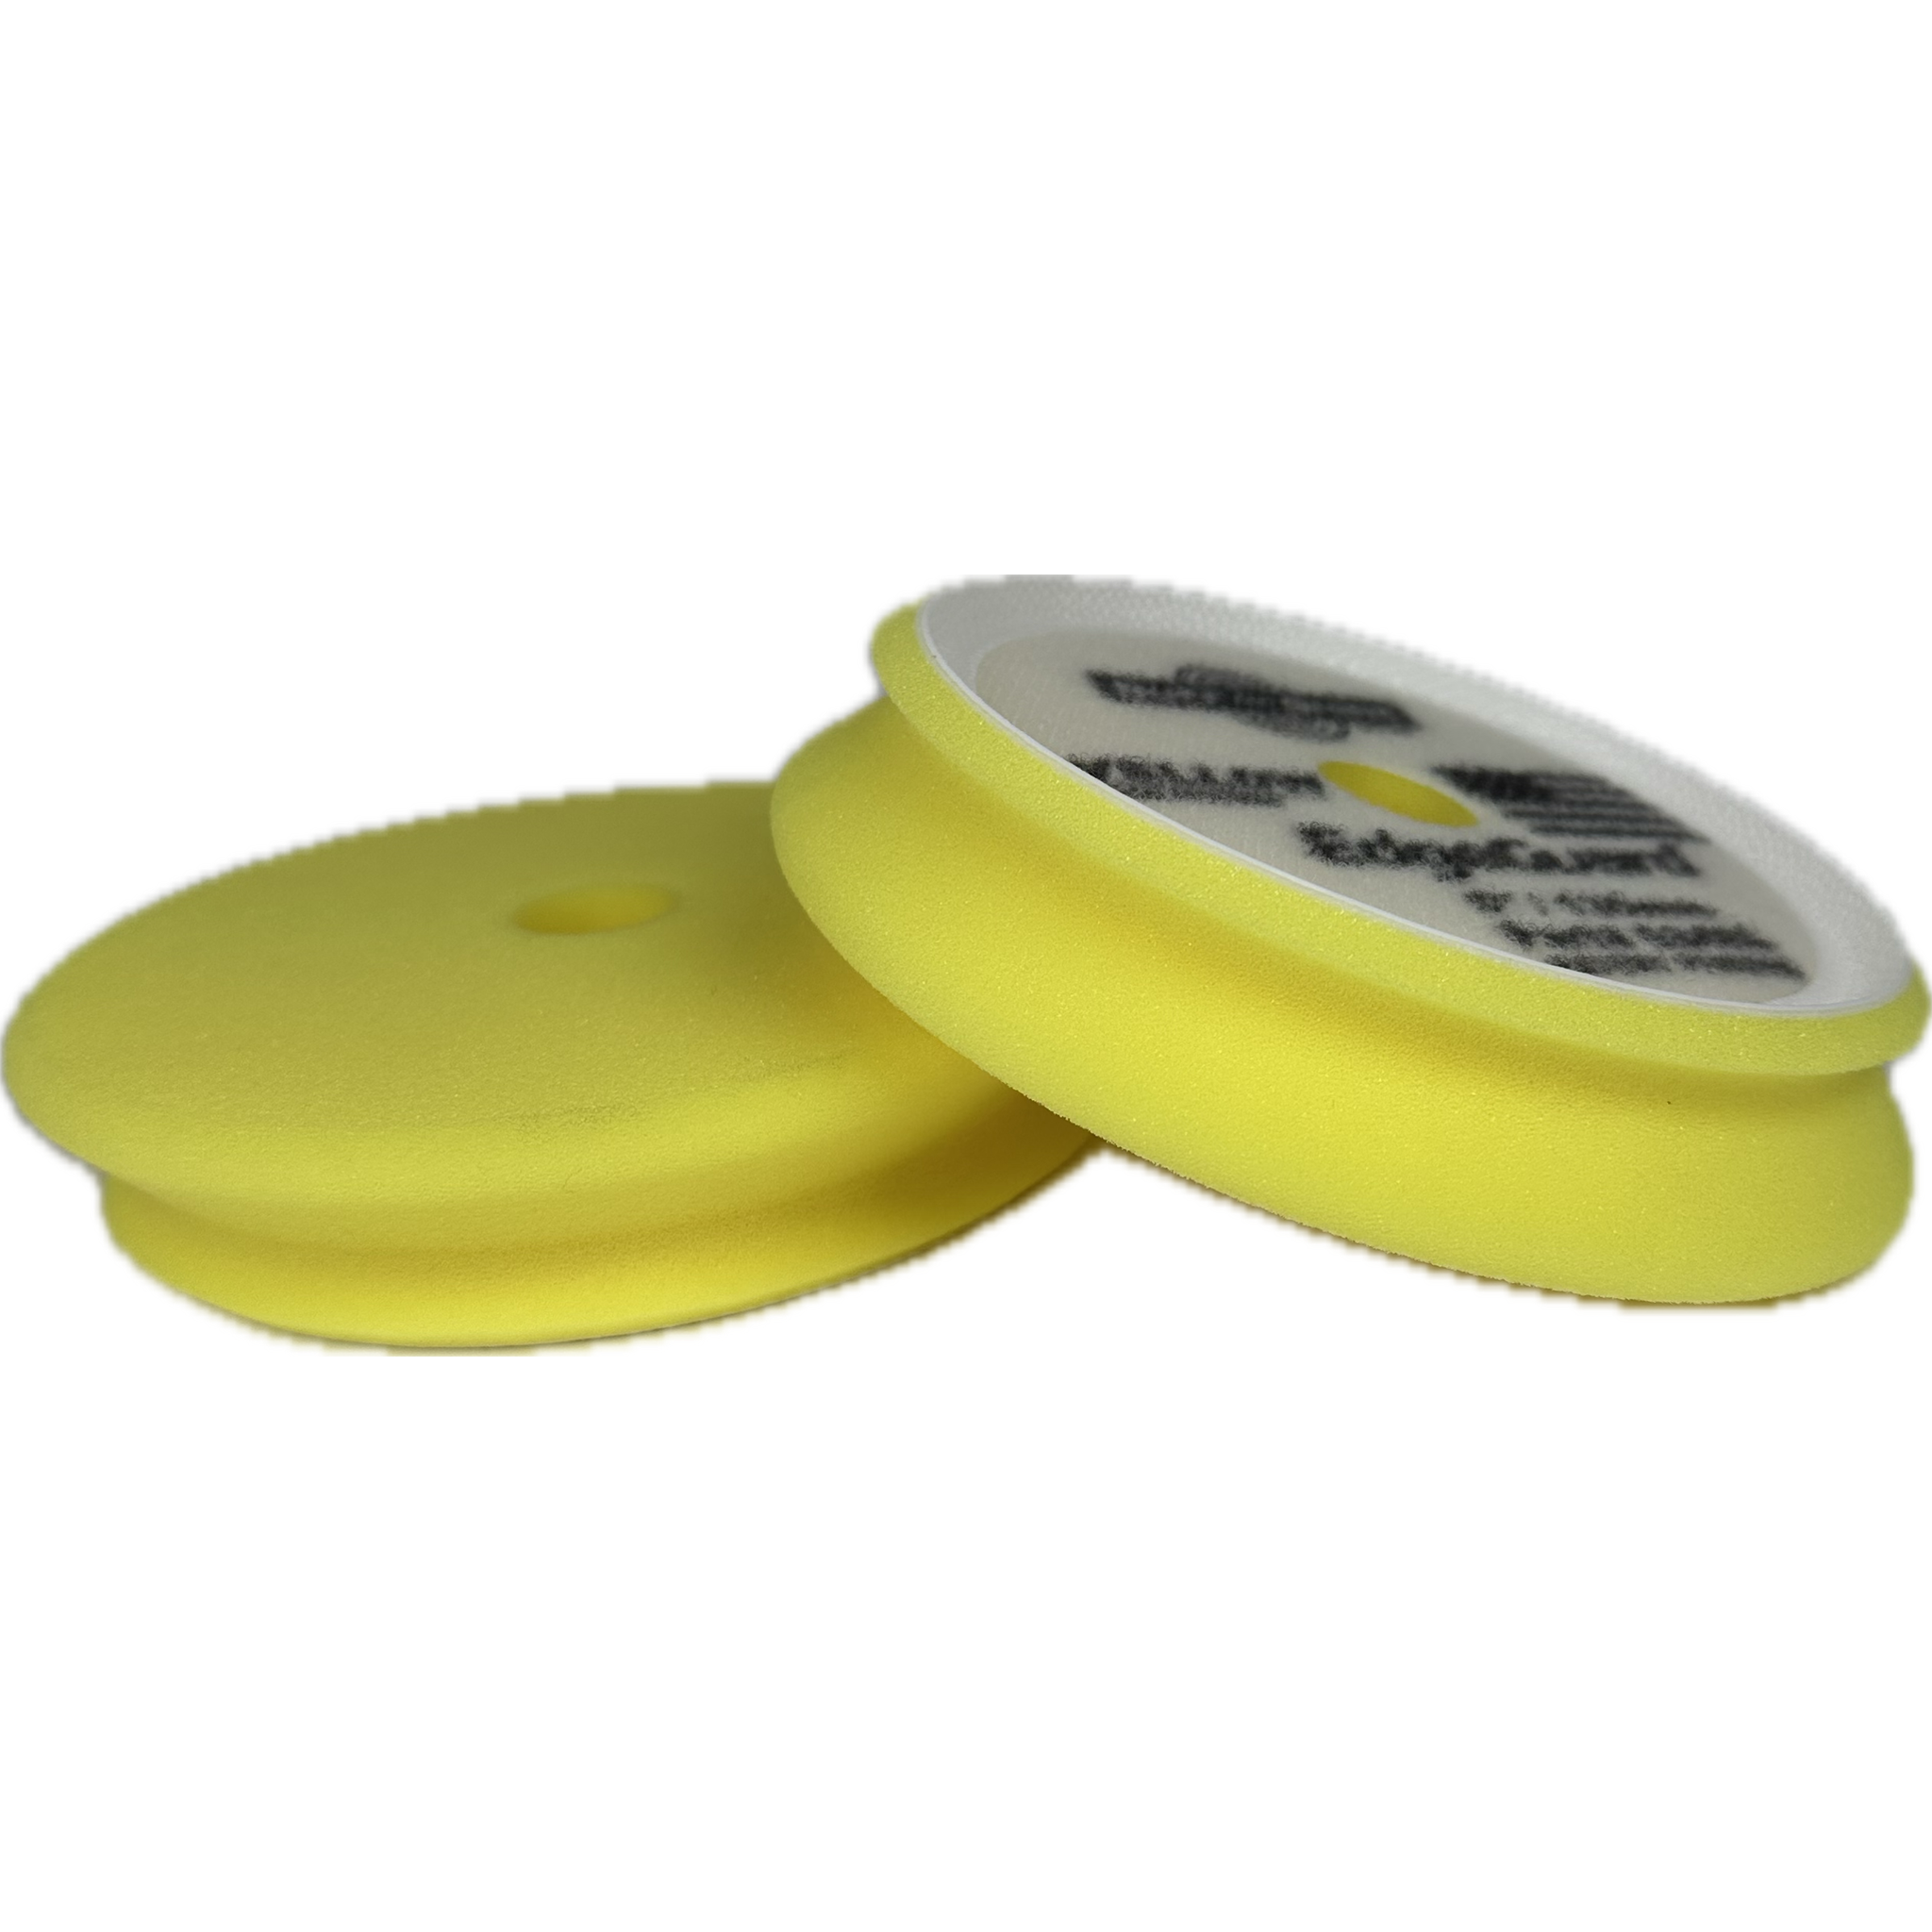 EdgeGuaFoam Pad, Yellow, Polishing, 5" / 130mm (2 pack)